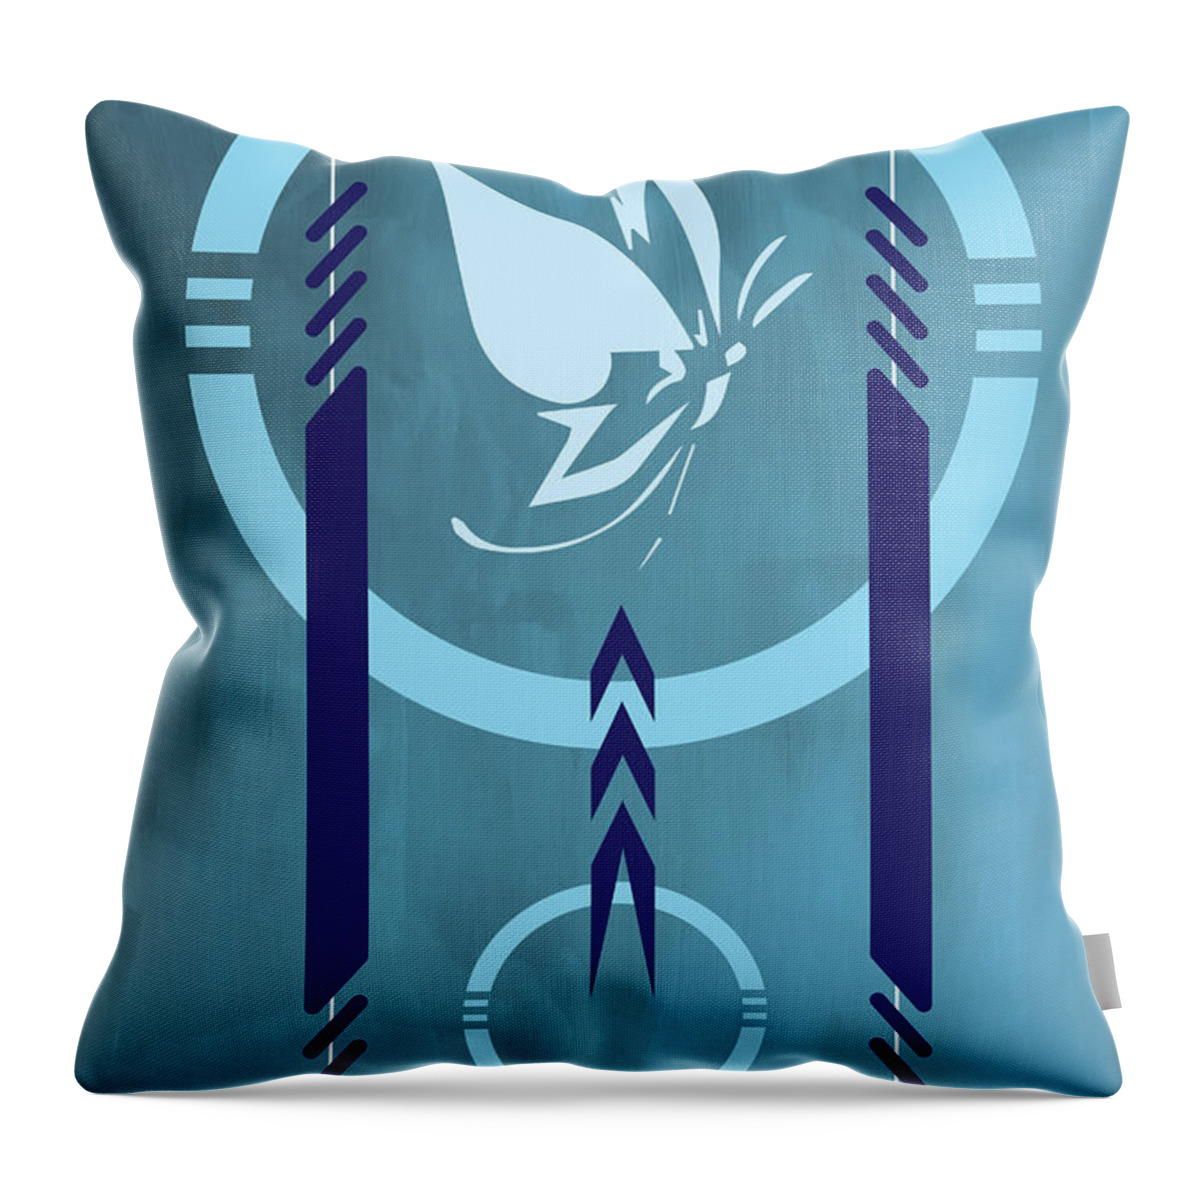 Digital Art Throw Pillow featuring the digital art Blue Butterfly by Yank Price